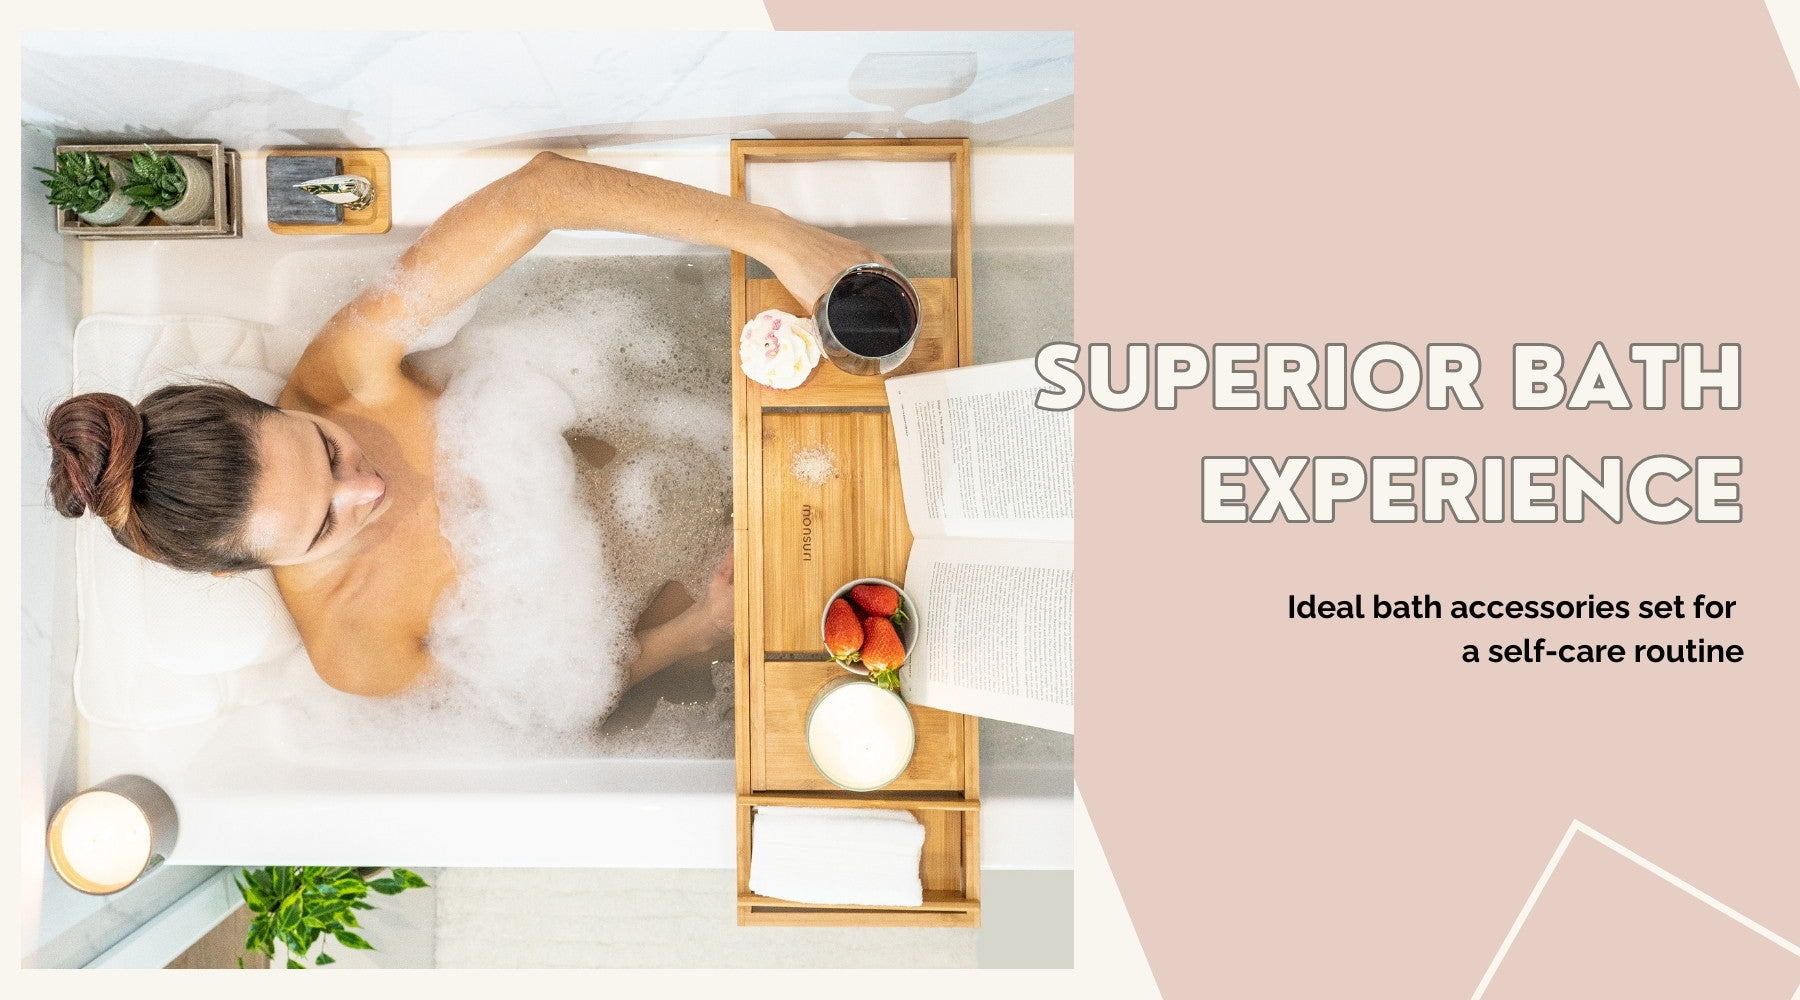 Monsuri's luxury bath accessories, perfect for transforming bath time